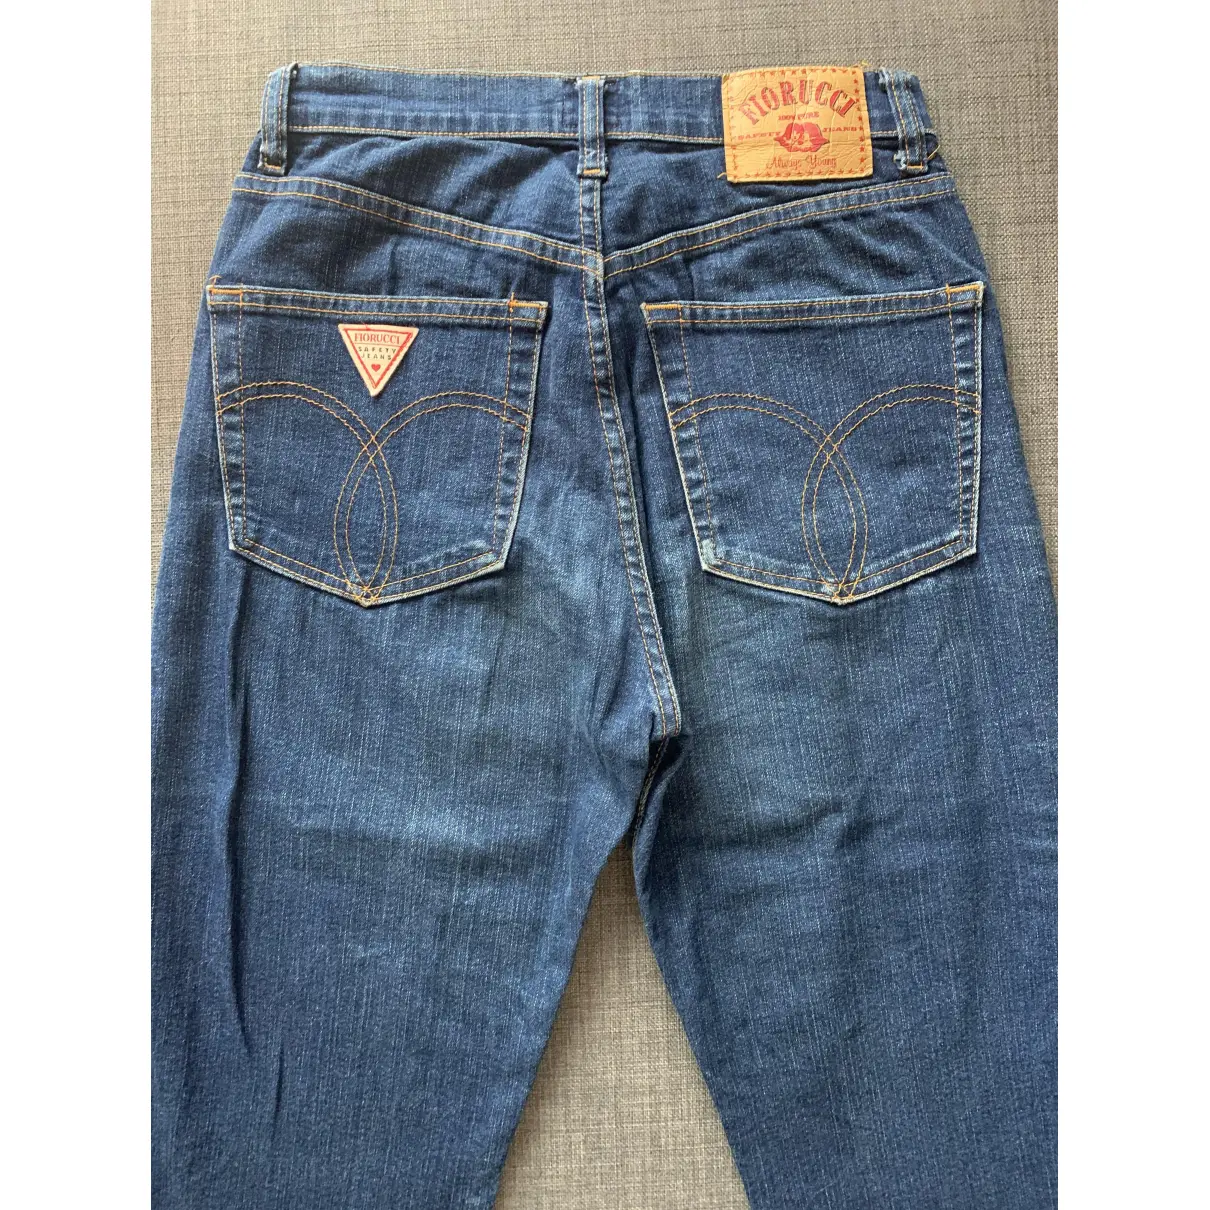 Straight jeans Fiorucci - Vintage